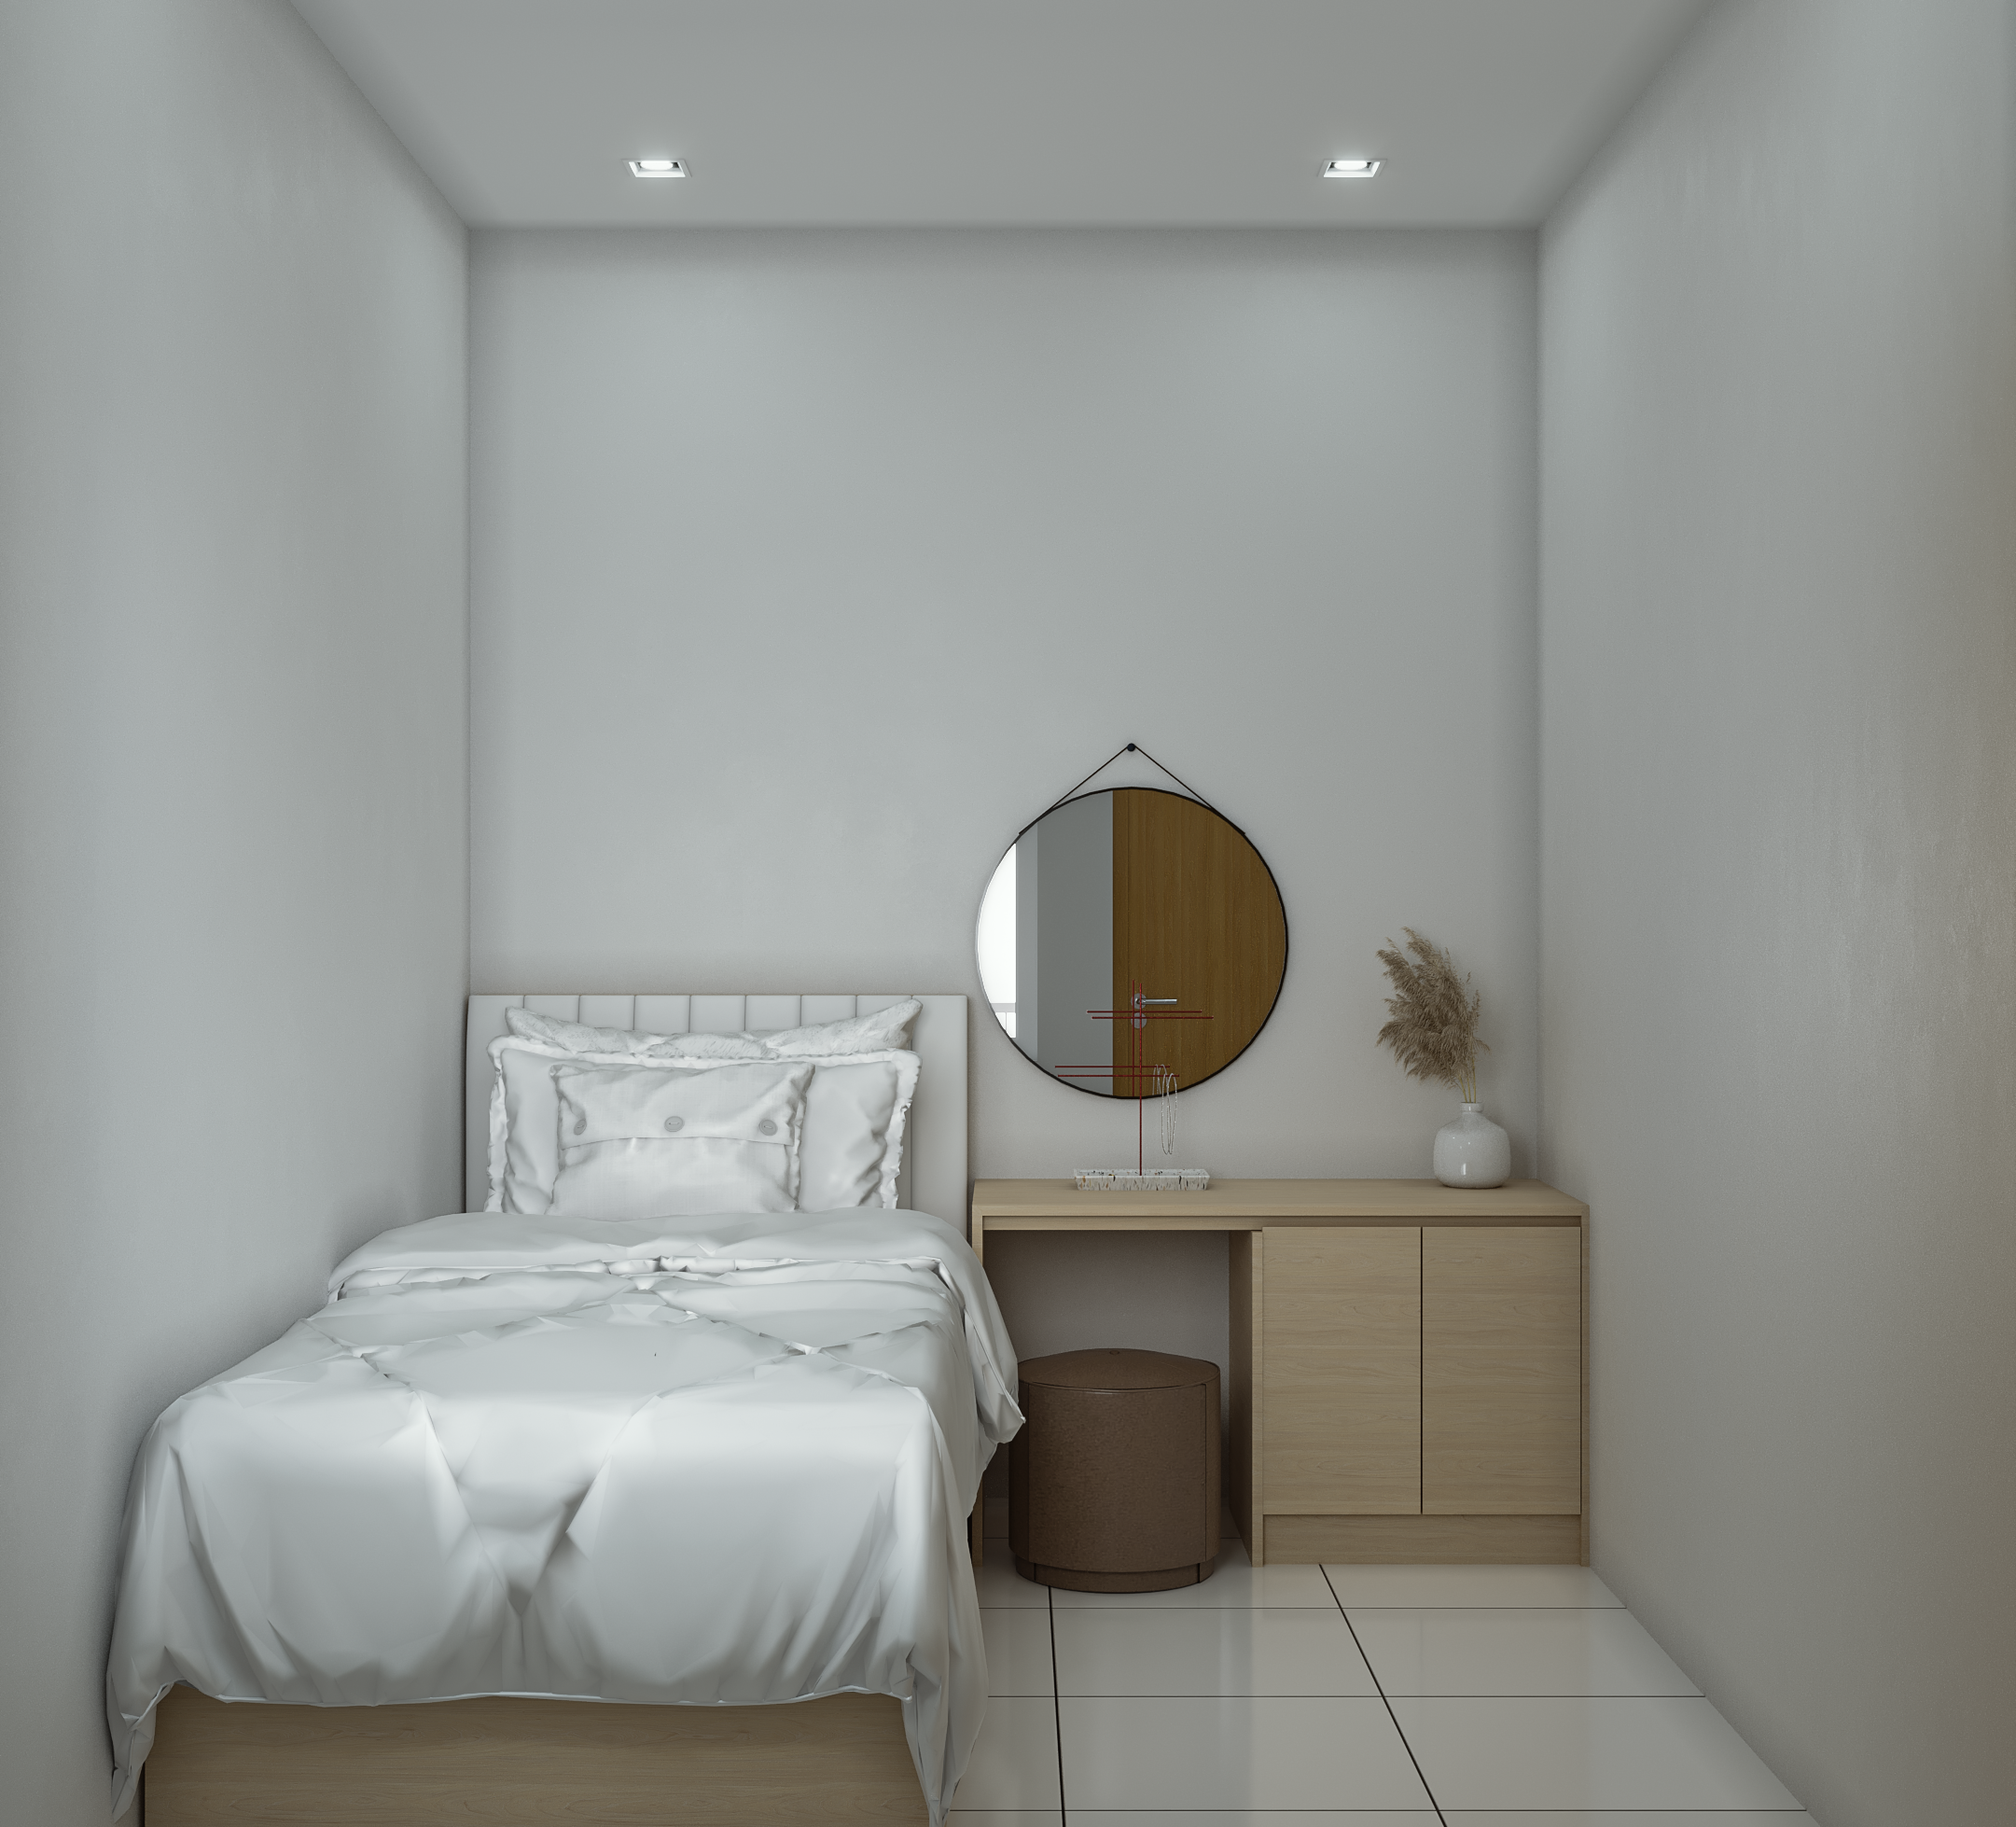 interior klinik modern minimalis